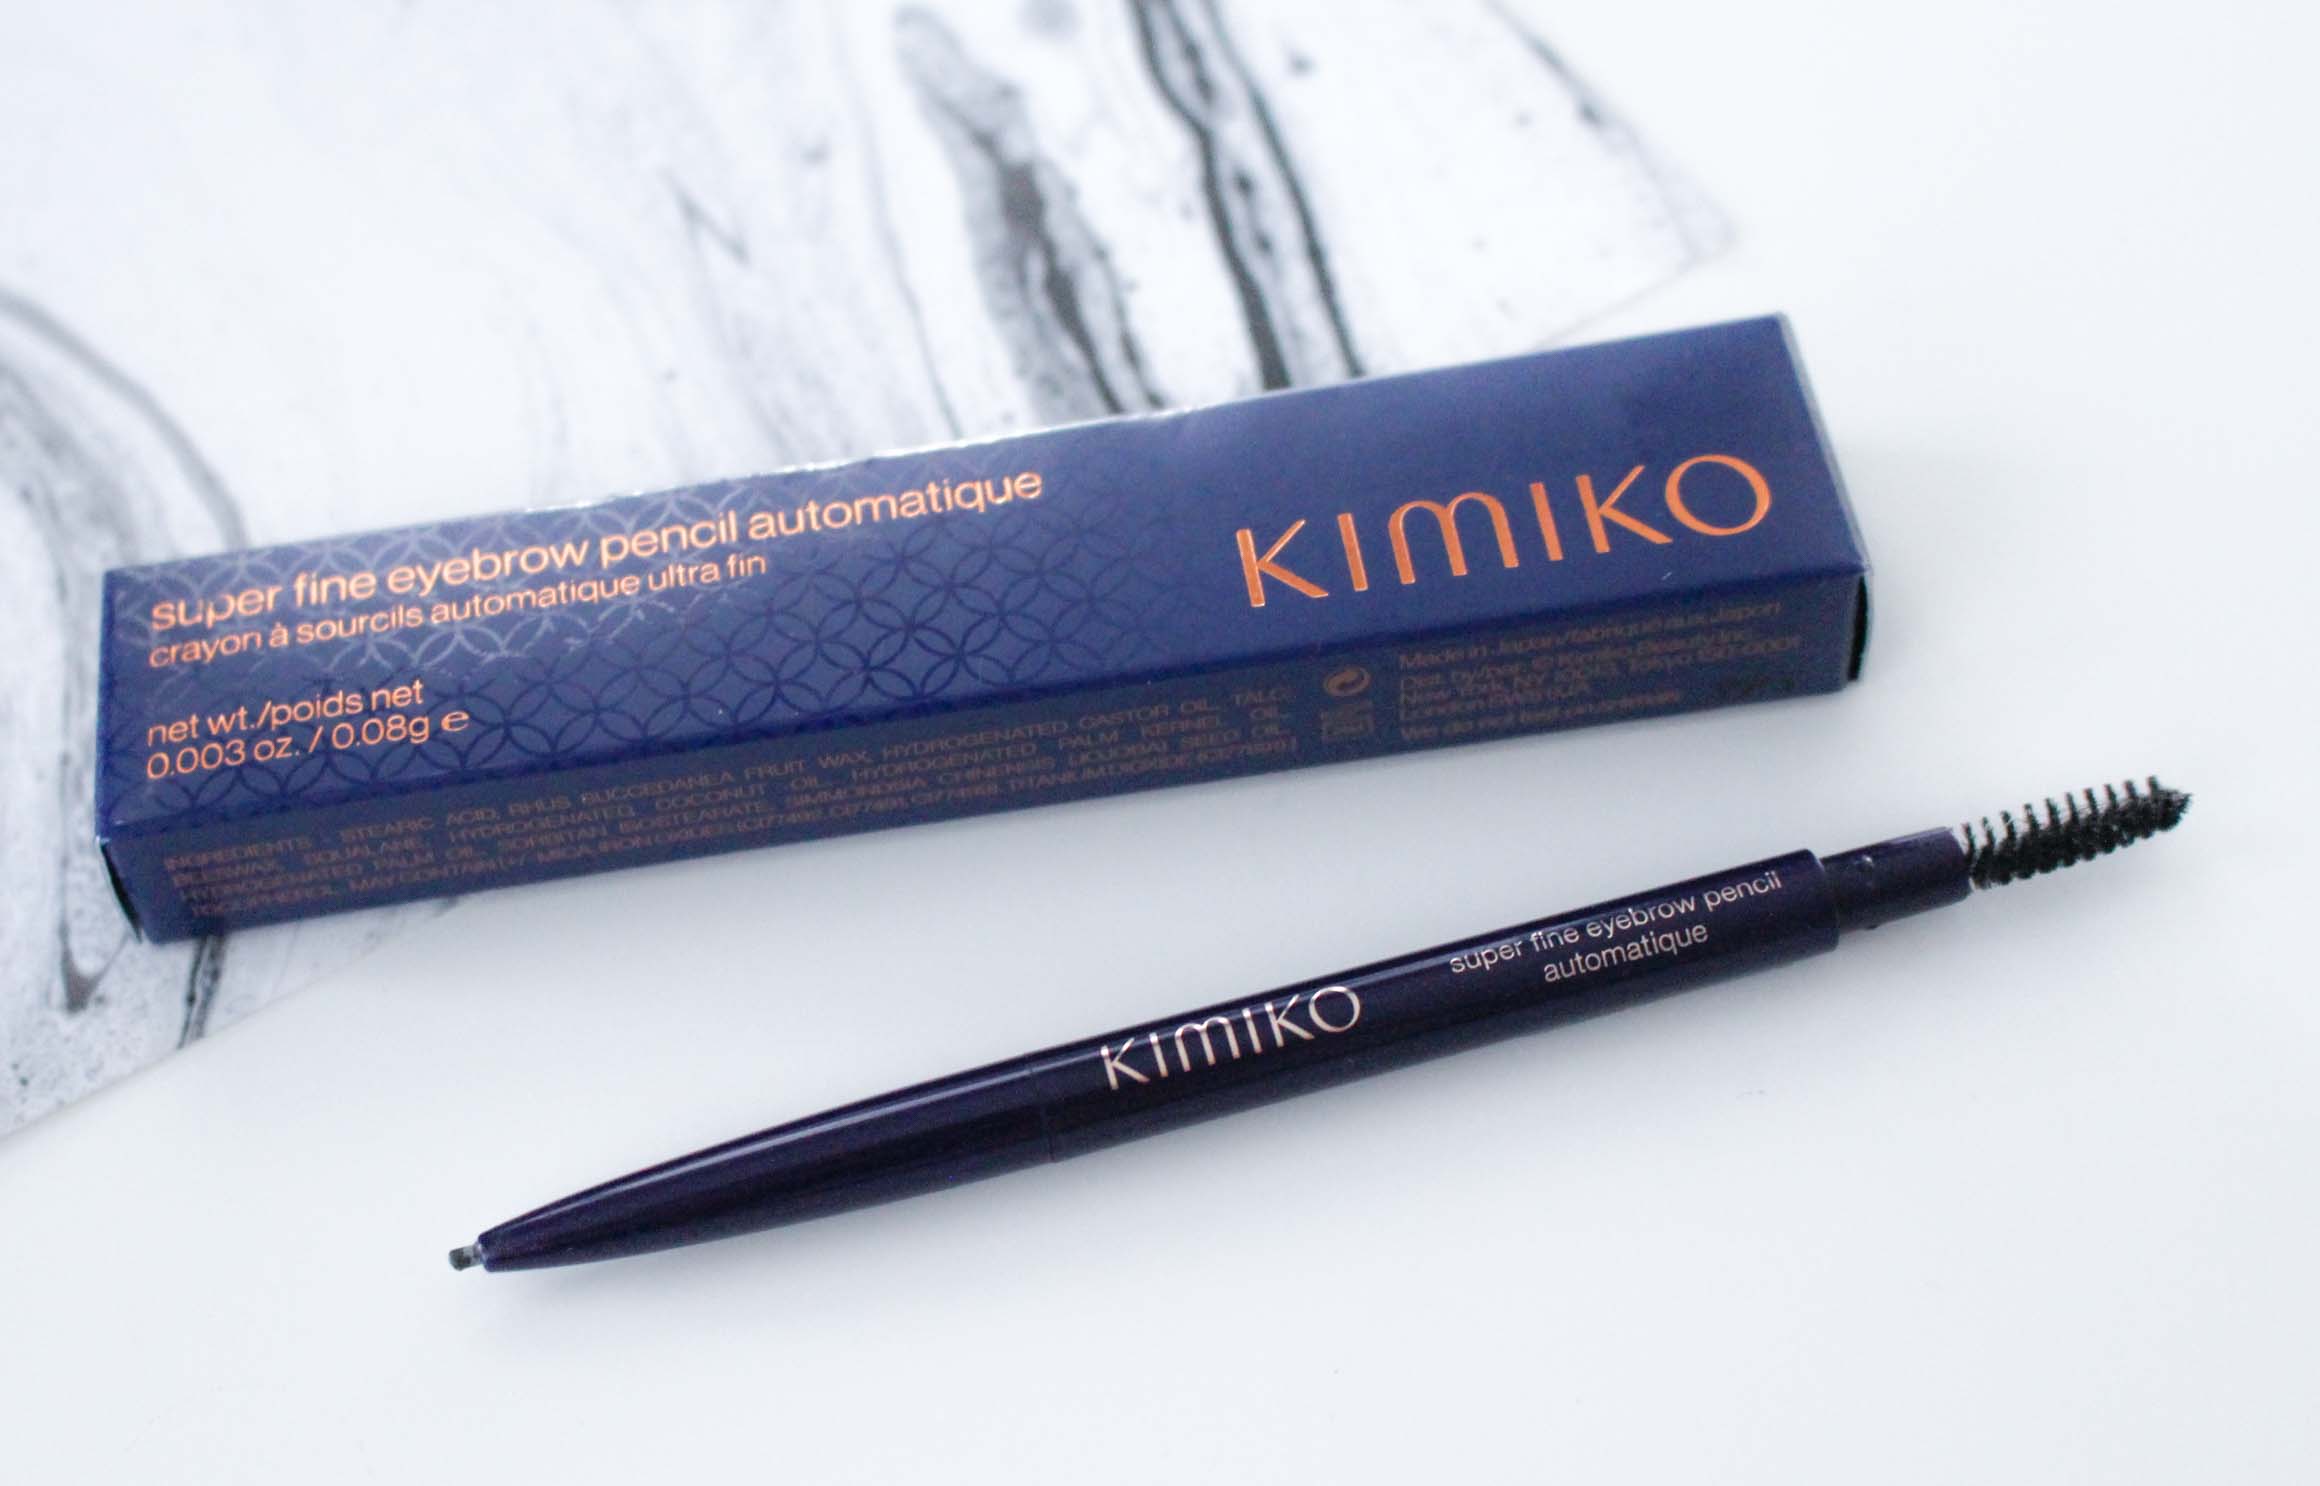 Kimiko Super Fine Eyebrow Pencil Automatique in Black Tea.